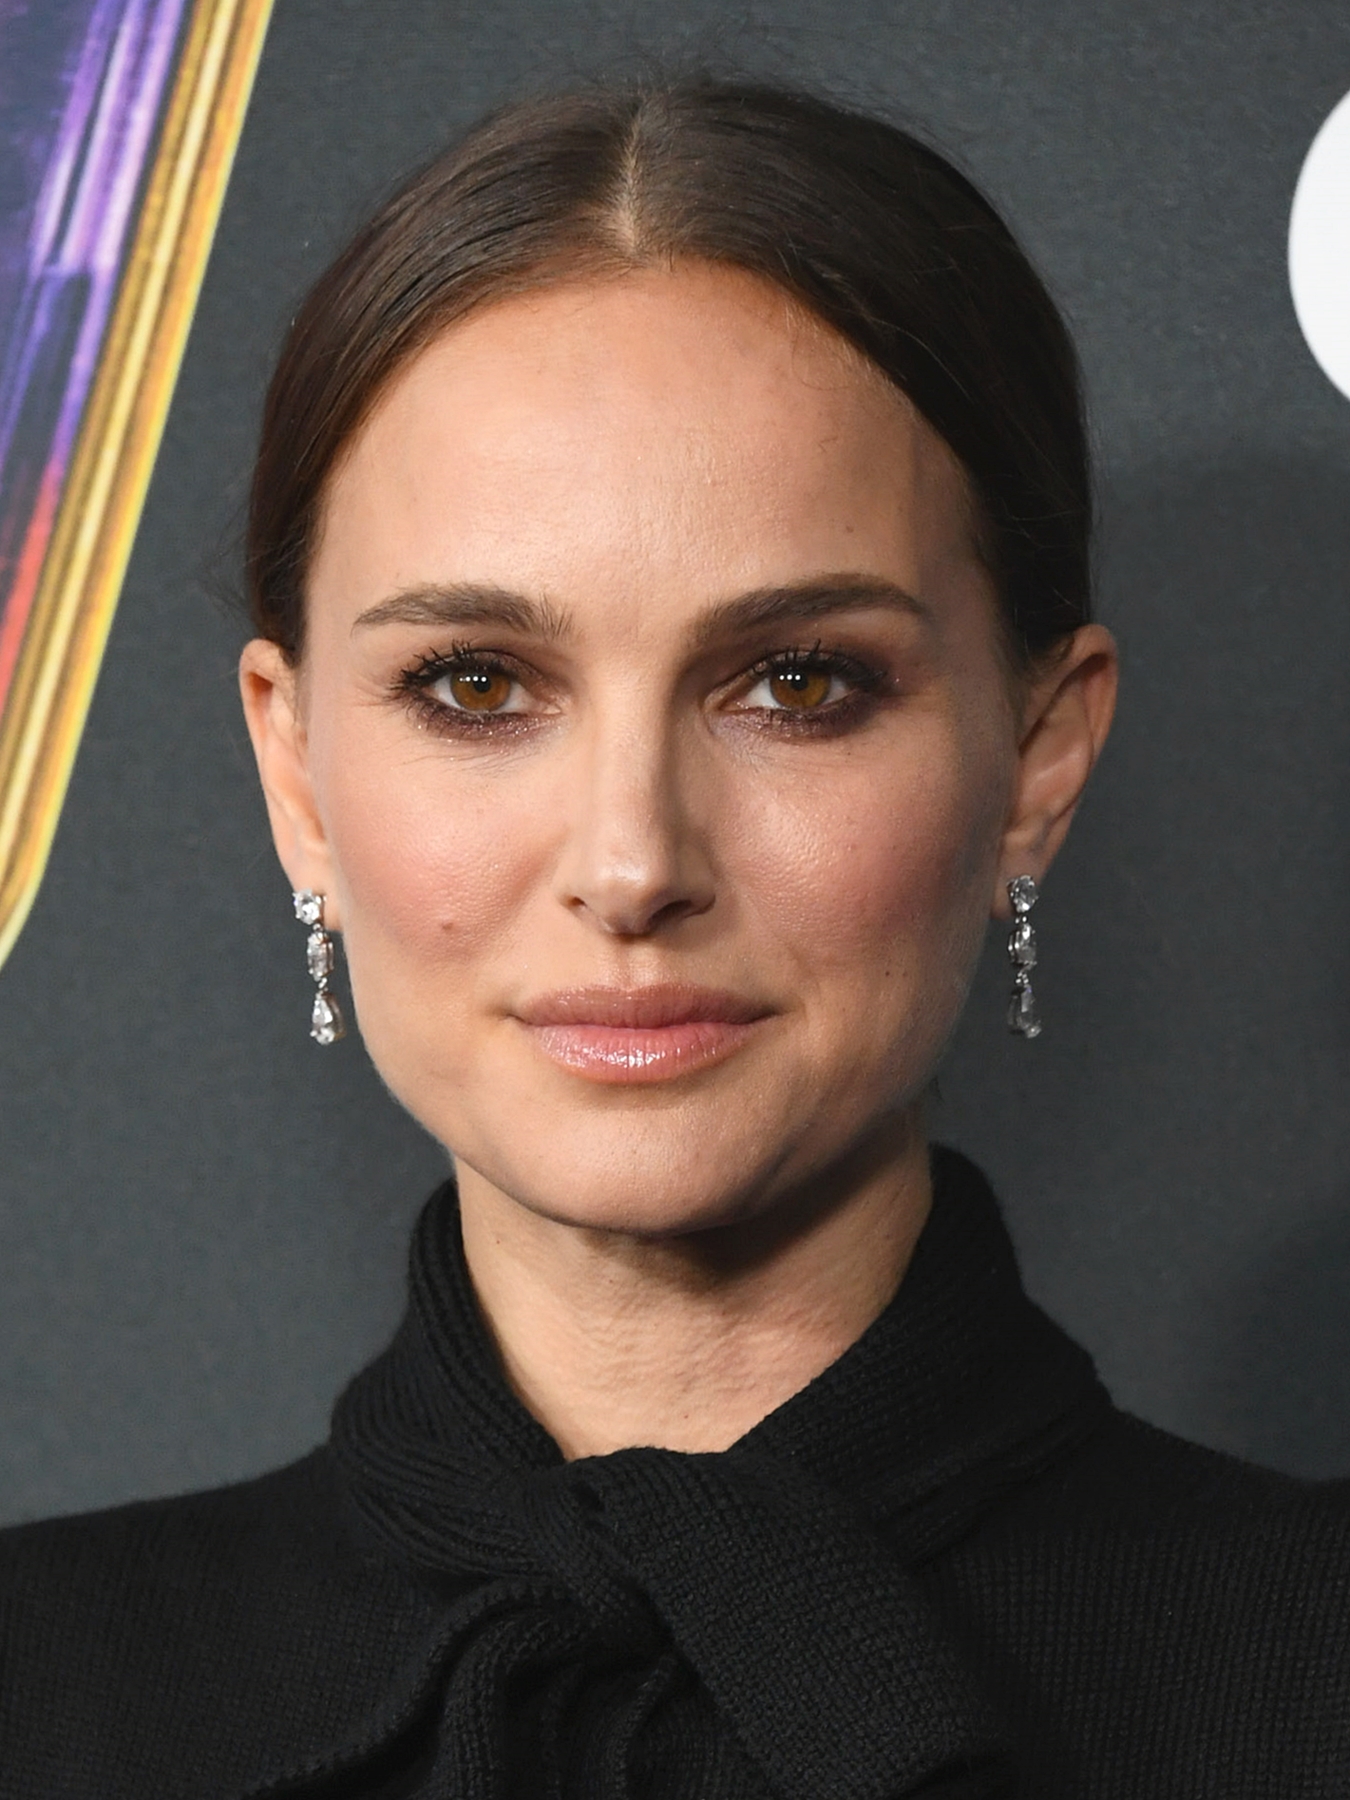 Natalie Portman Natalie Portman Calls Out Article For Speculating She